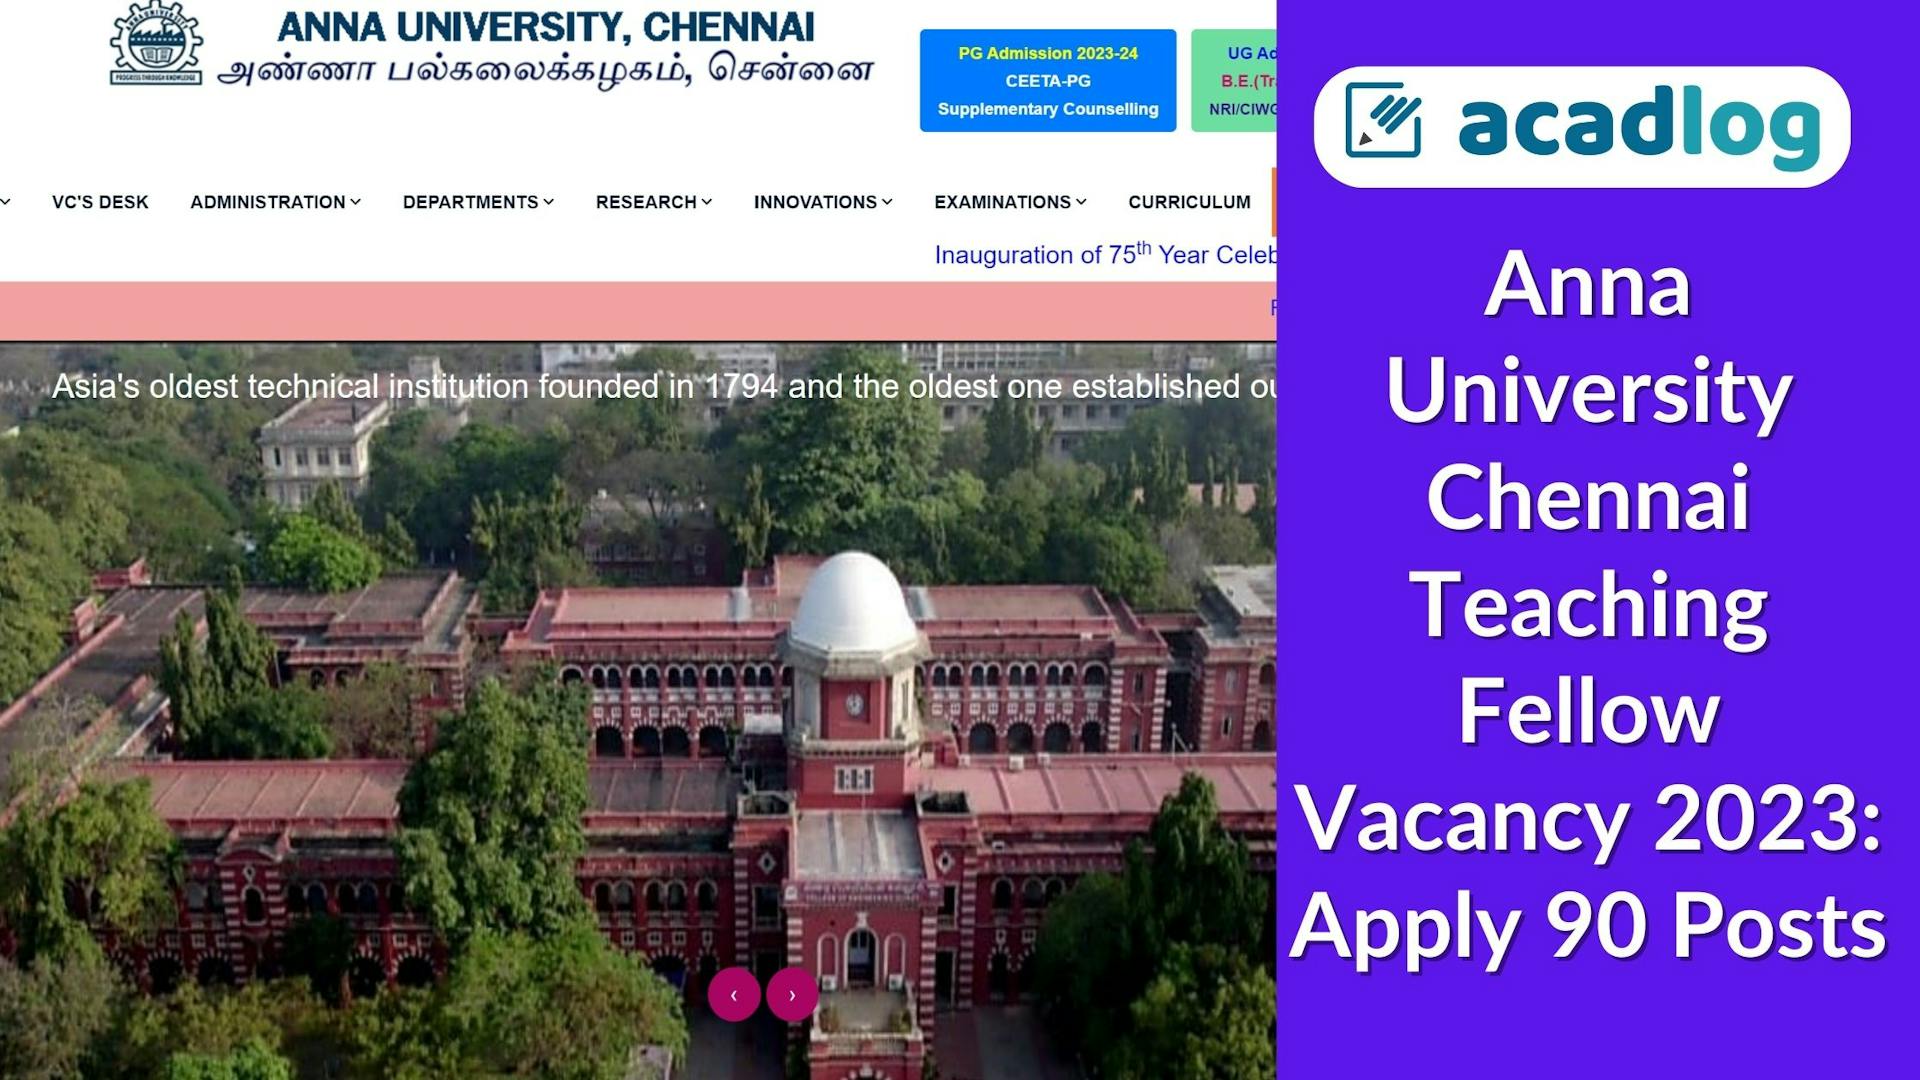 Anna University Chennai Teaching Fellow Vacancy 2023: Apply 90 Posts